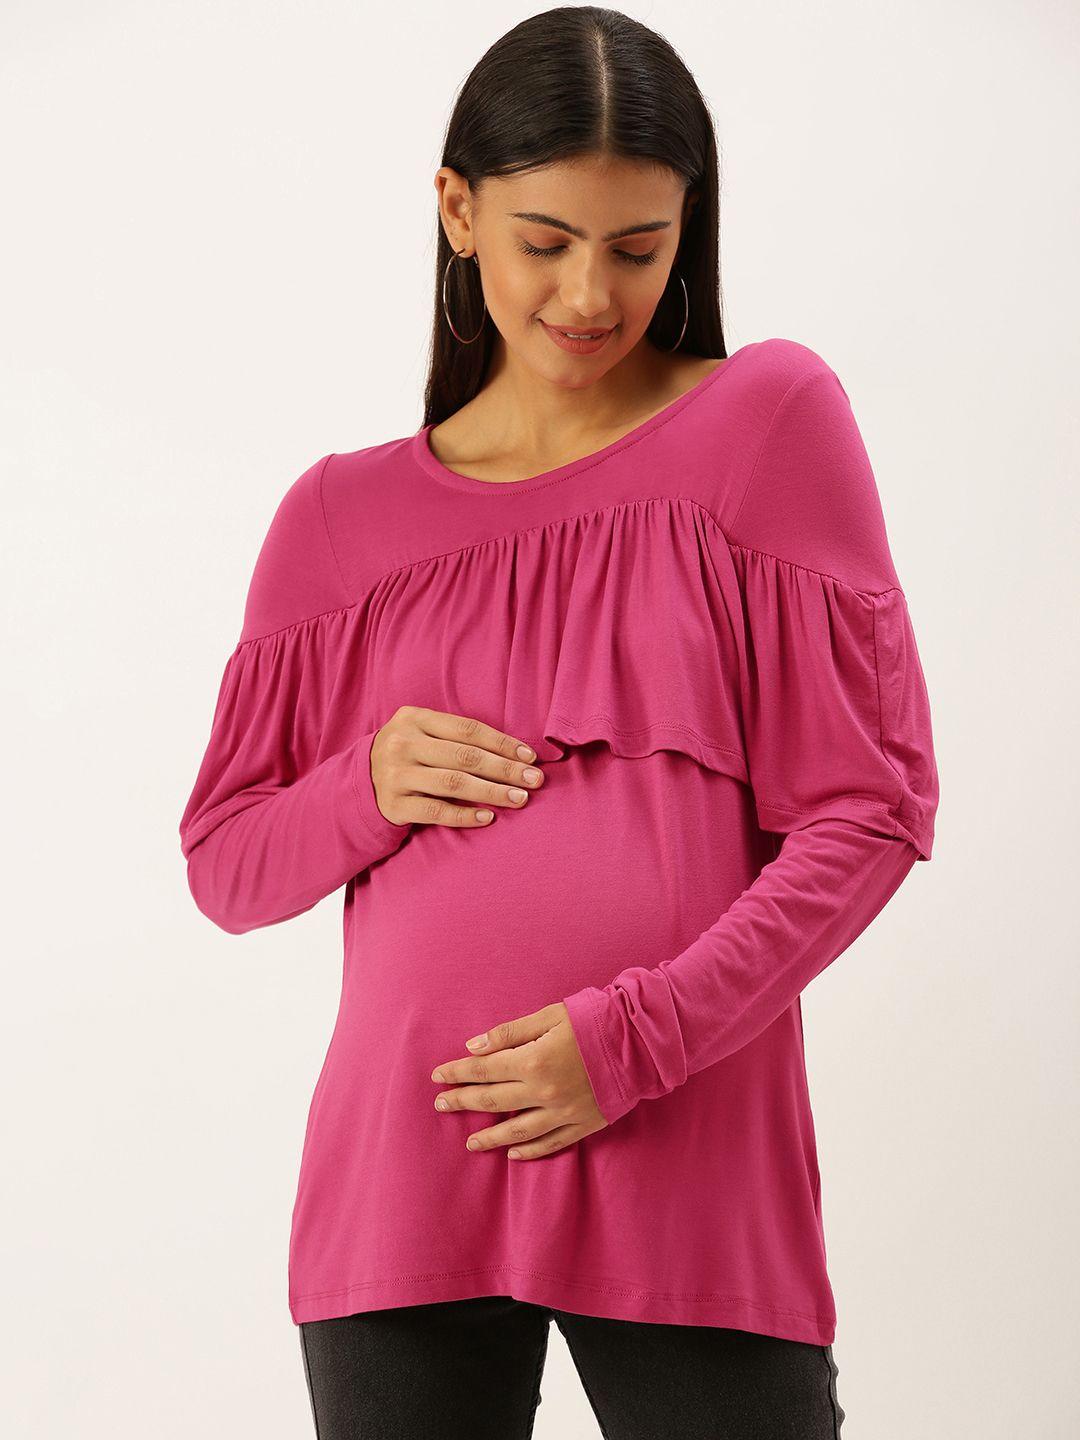 blush 9 maternity women pink solid ruffles detail maternity top